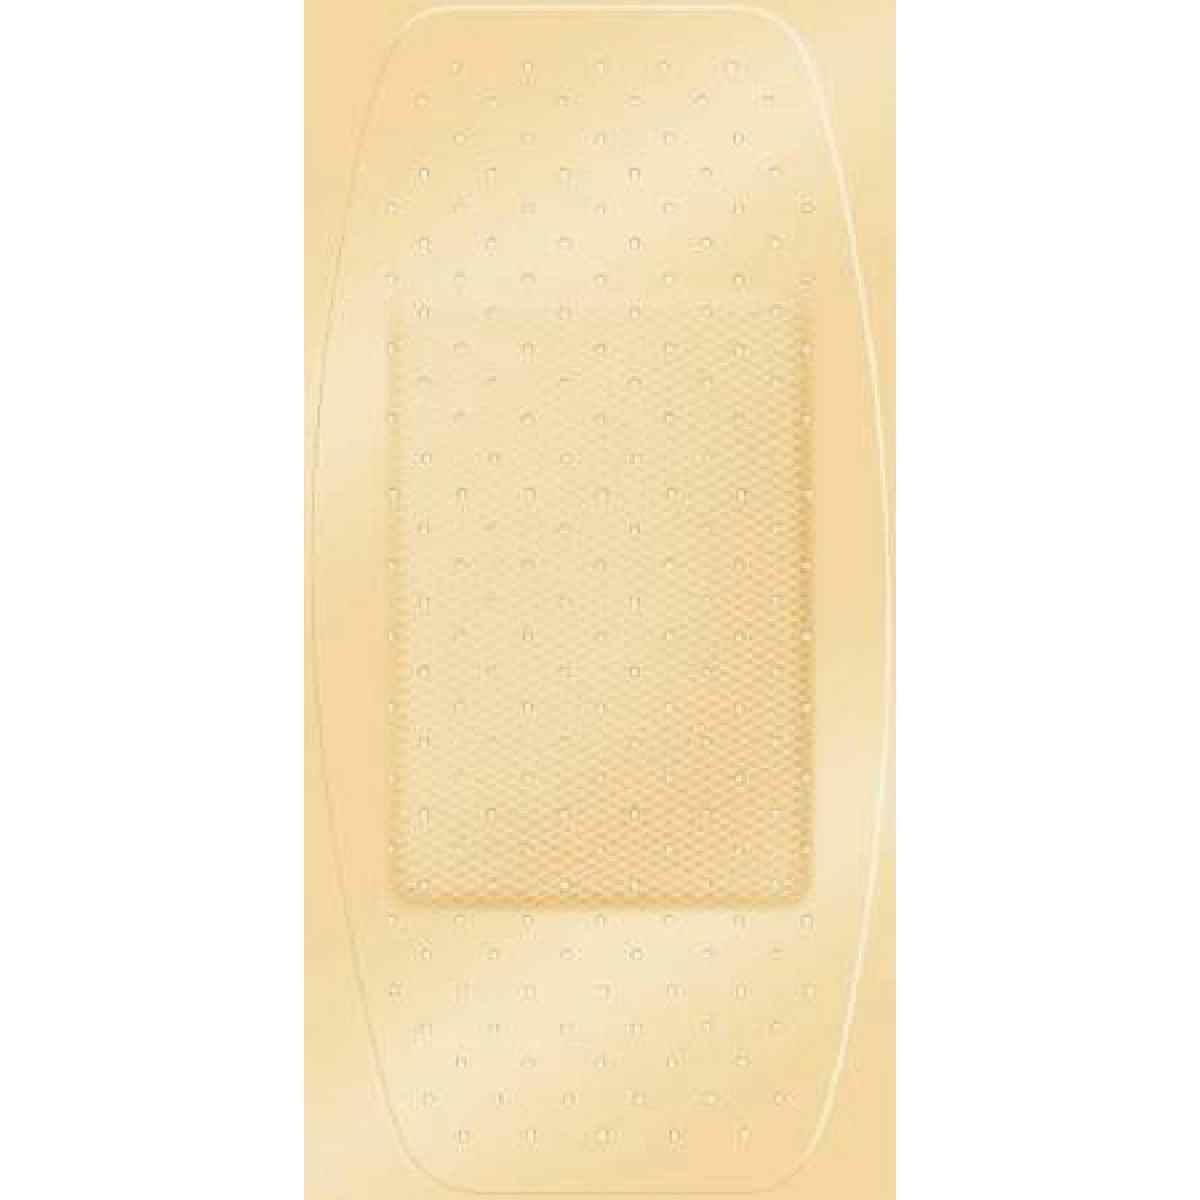 Careband Adhesive Bandages Strip, 2 X 4", CBD2016-012-000, Sheer - Box of 50